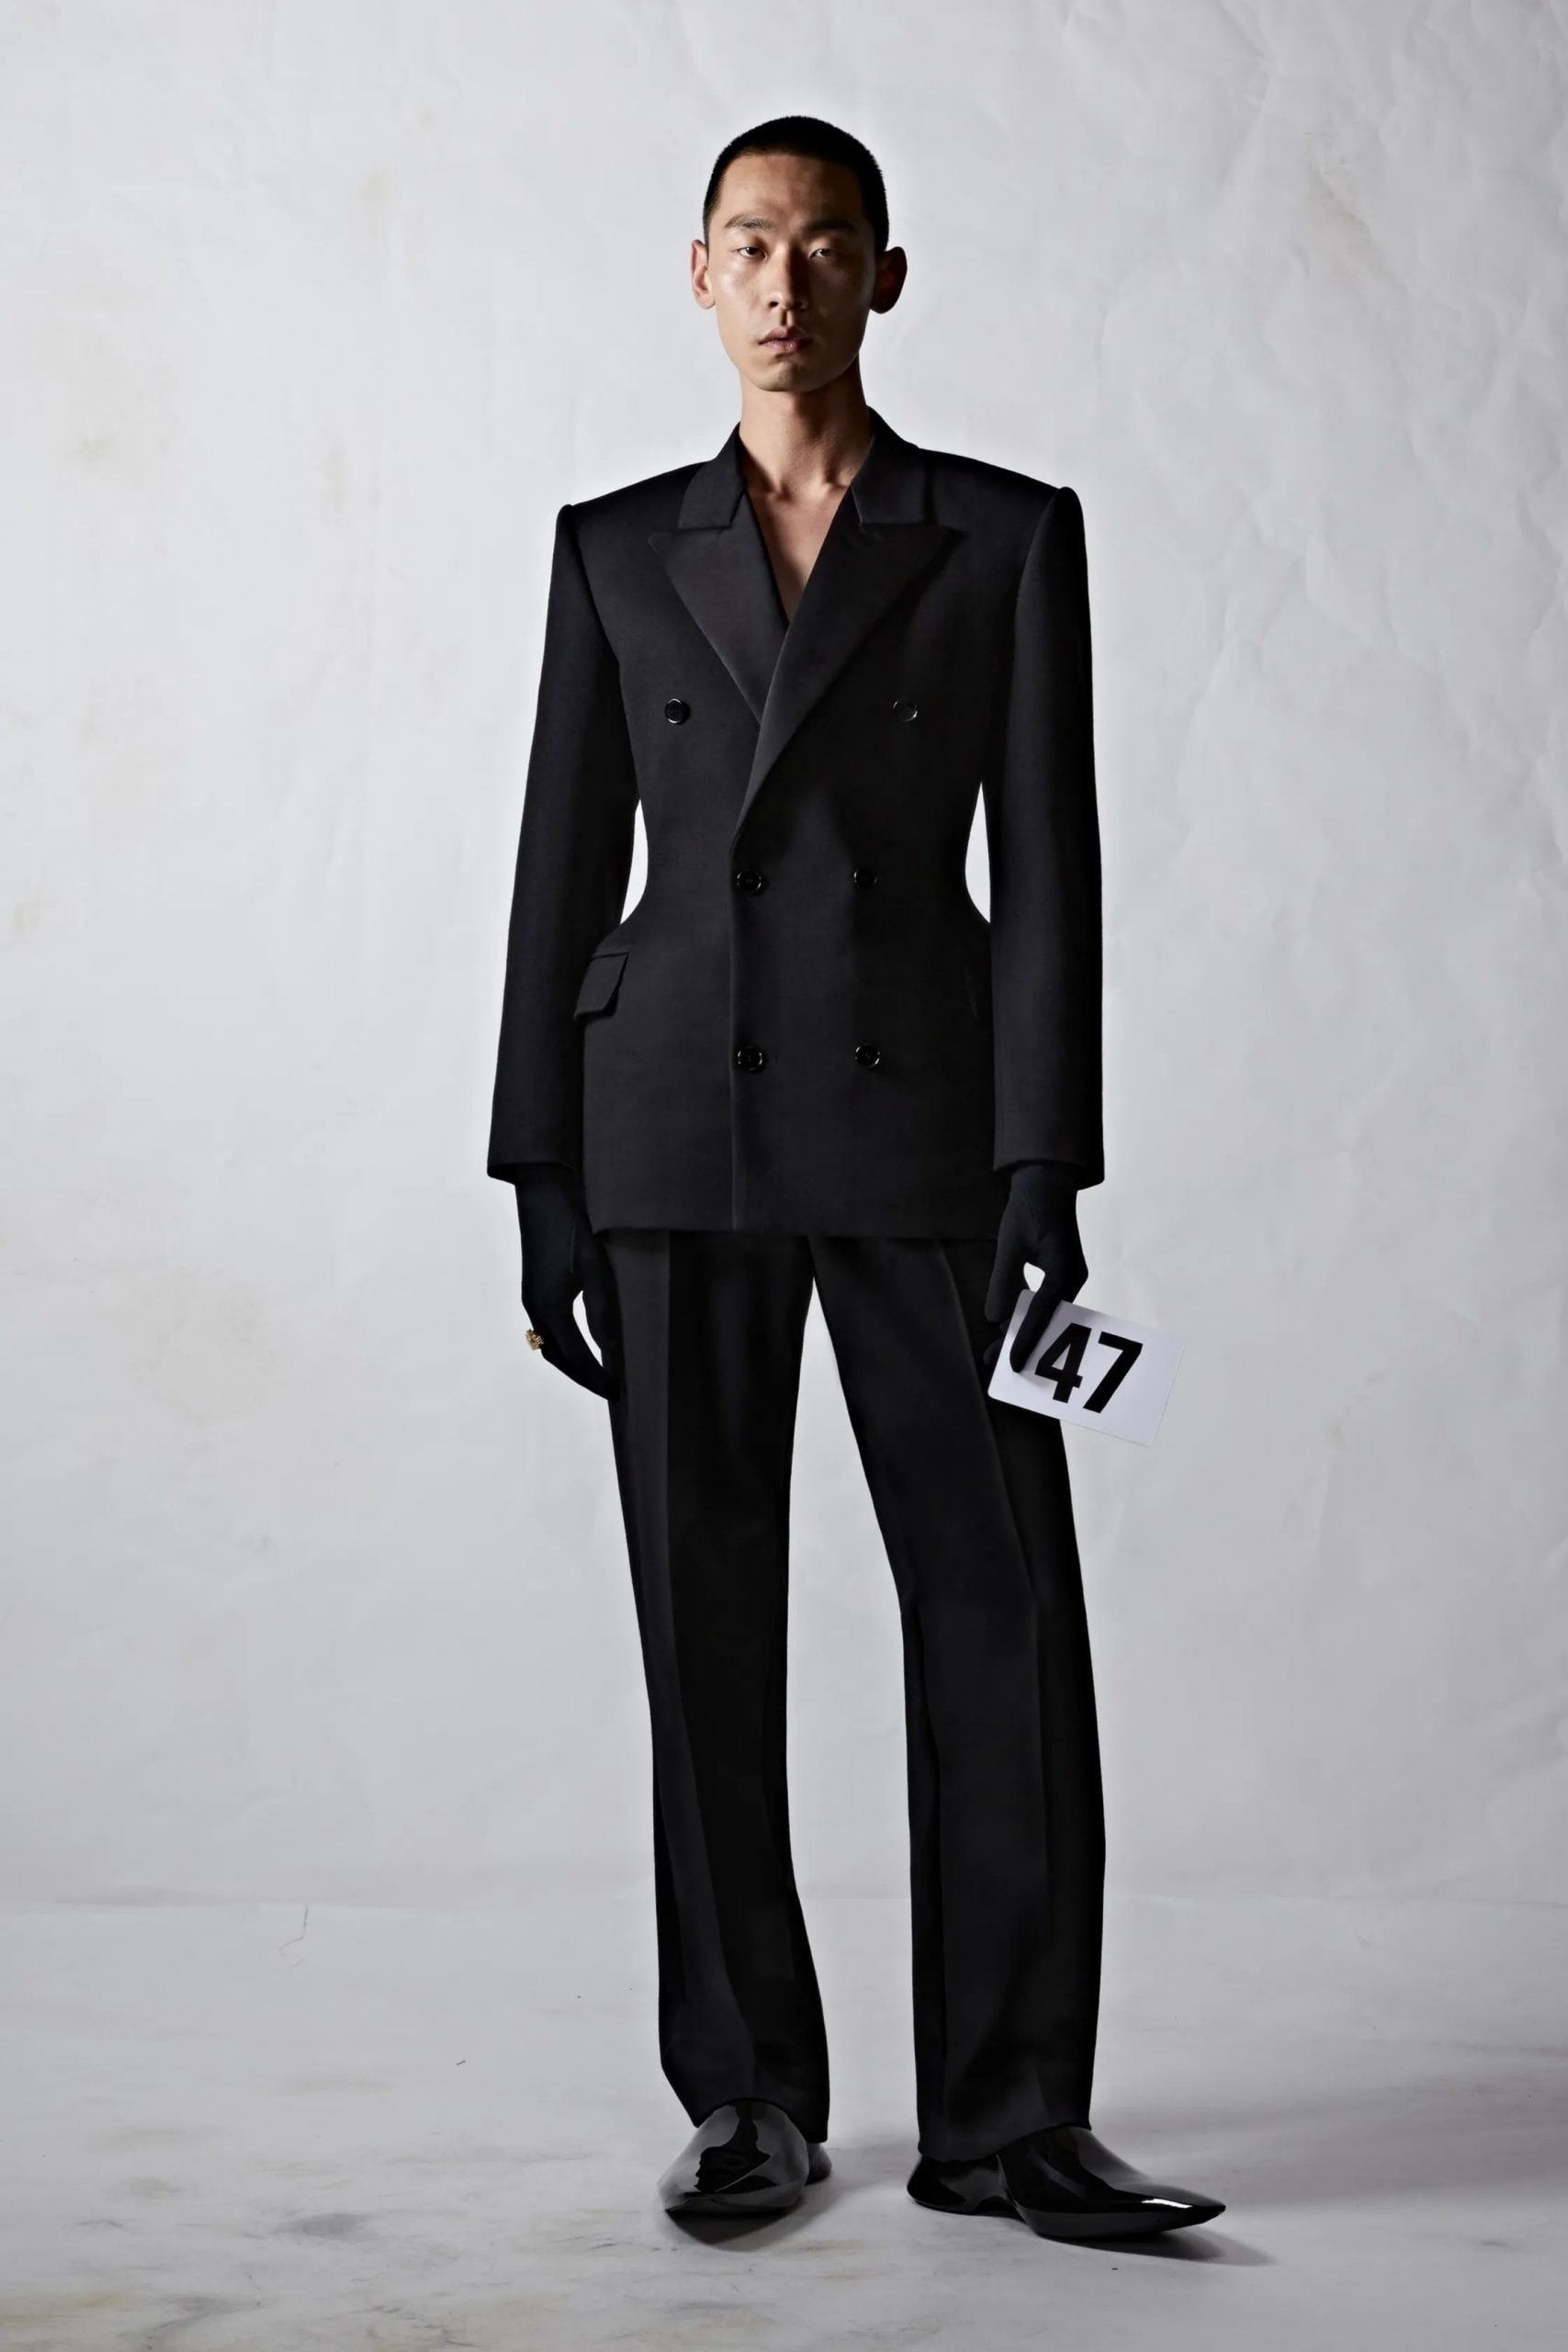 Balenciaga Couture detail runway look kim nicole dua design 2022 51st